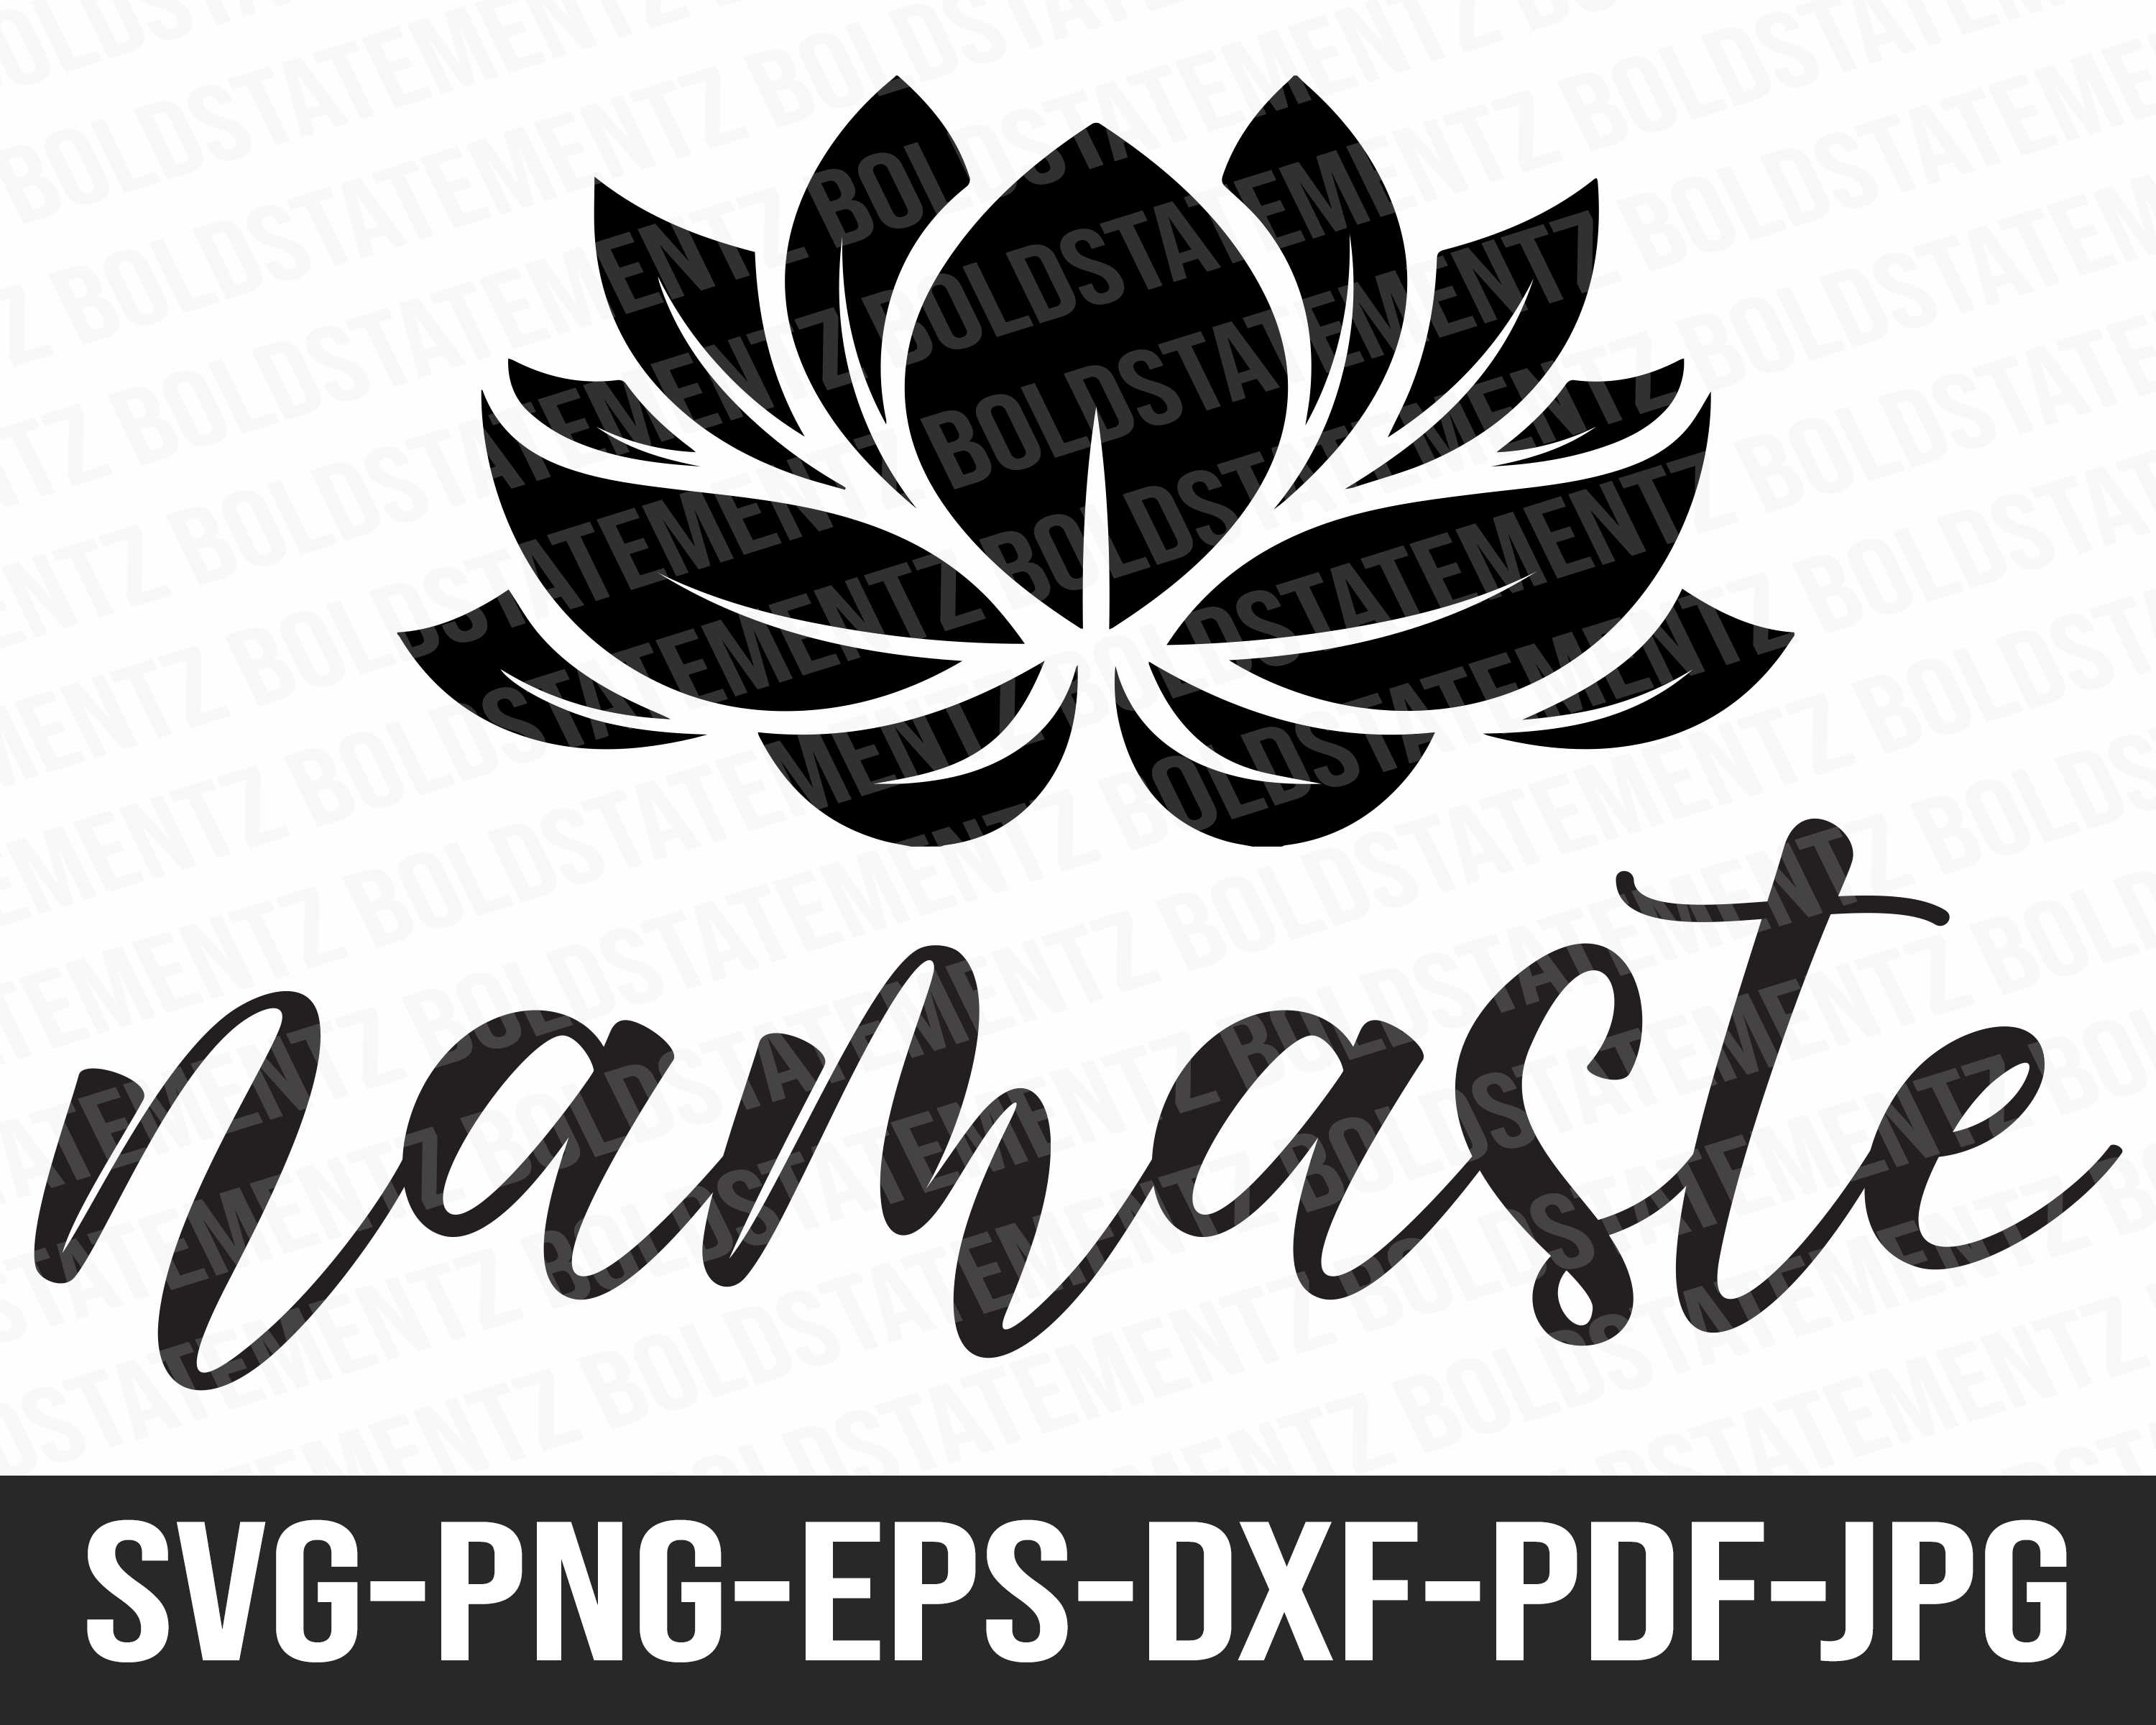 Namaste SVG | Yoga SVG | Lotus Flower SVG | Cutting File for Cricut, Silhouette | SVG DXF PNG EPS PDF JPG